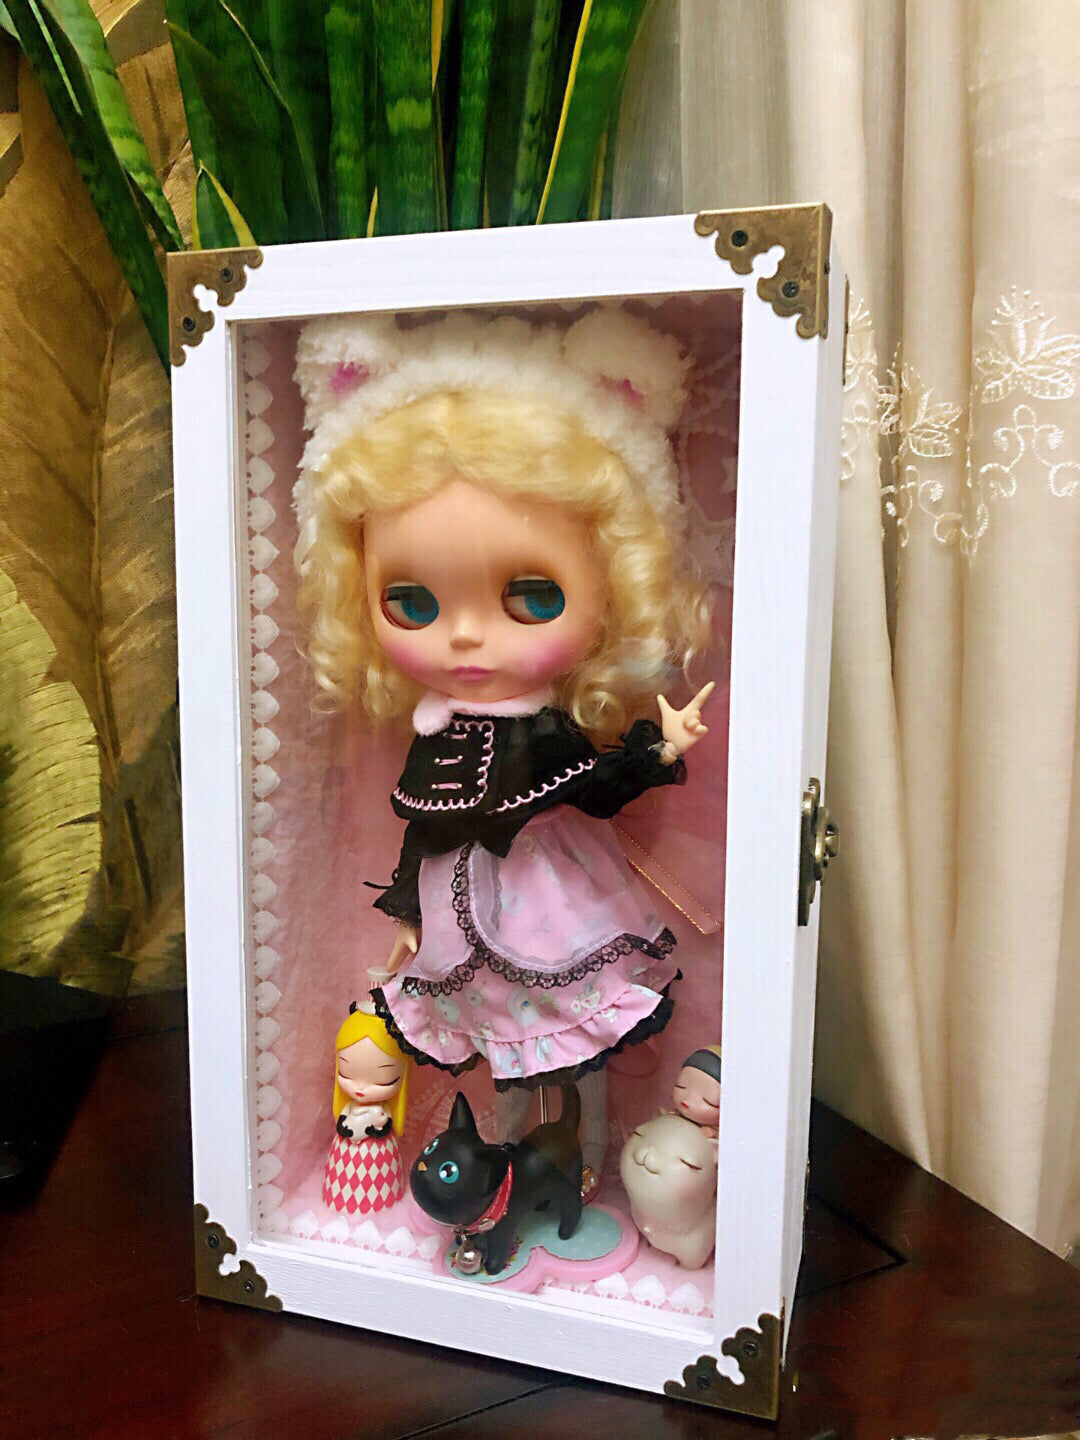 Blythe/BJD dollhouse dioramaroom French room box DOLLSHOWCASE/DISPLAYCASE/CARRYCASE for 12" blythe dolls 1:6 BJD/BARBIE/MONSTERHIGH DOLLS10